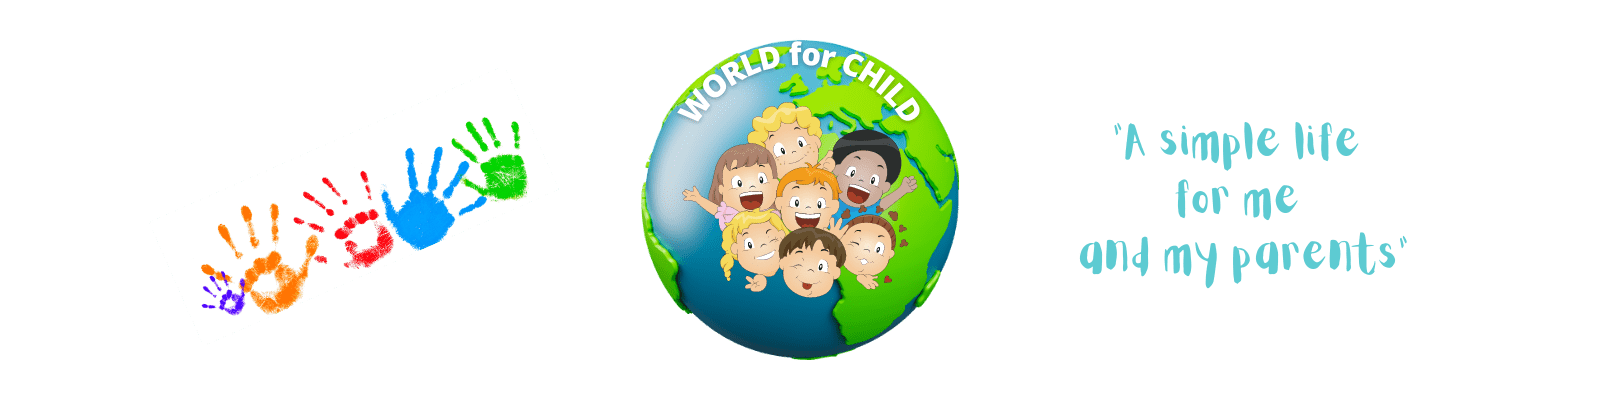 WORLD 4 CHILD